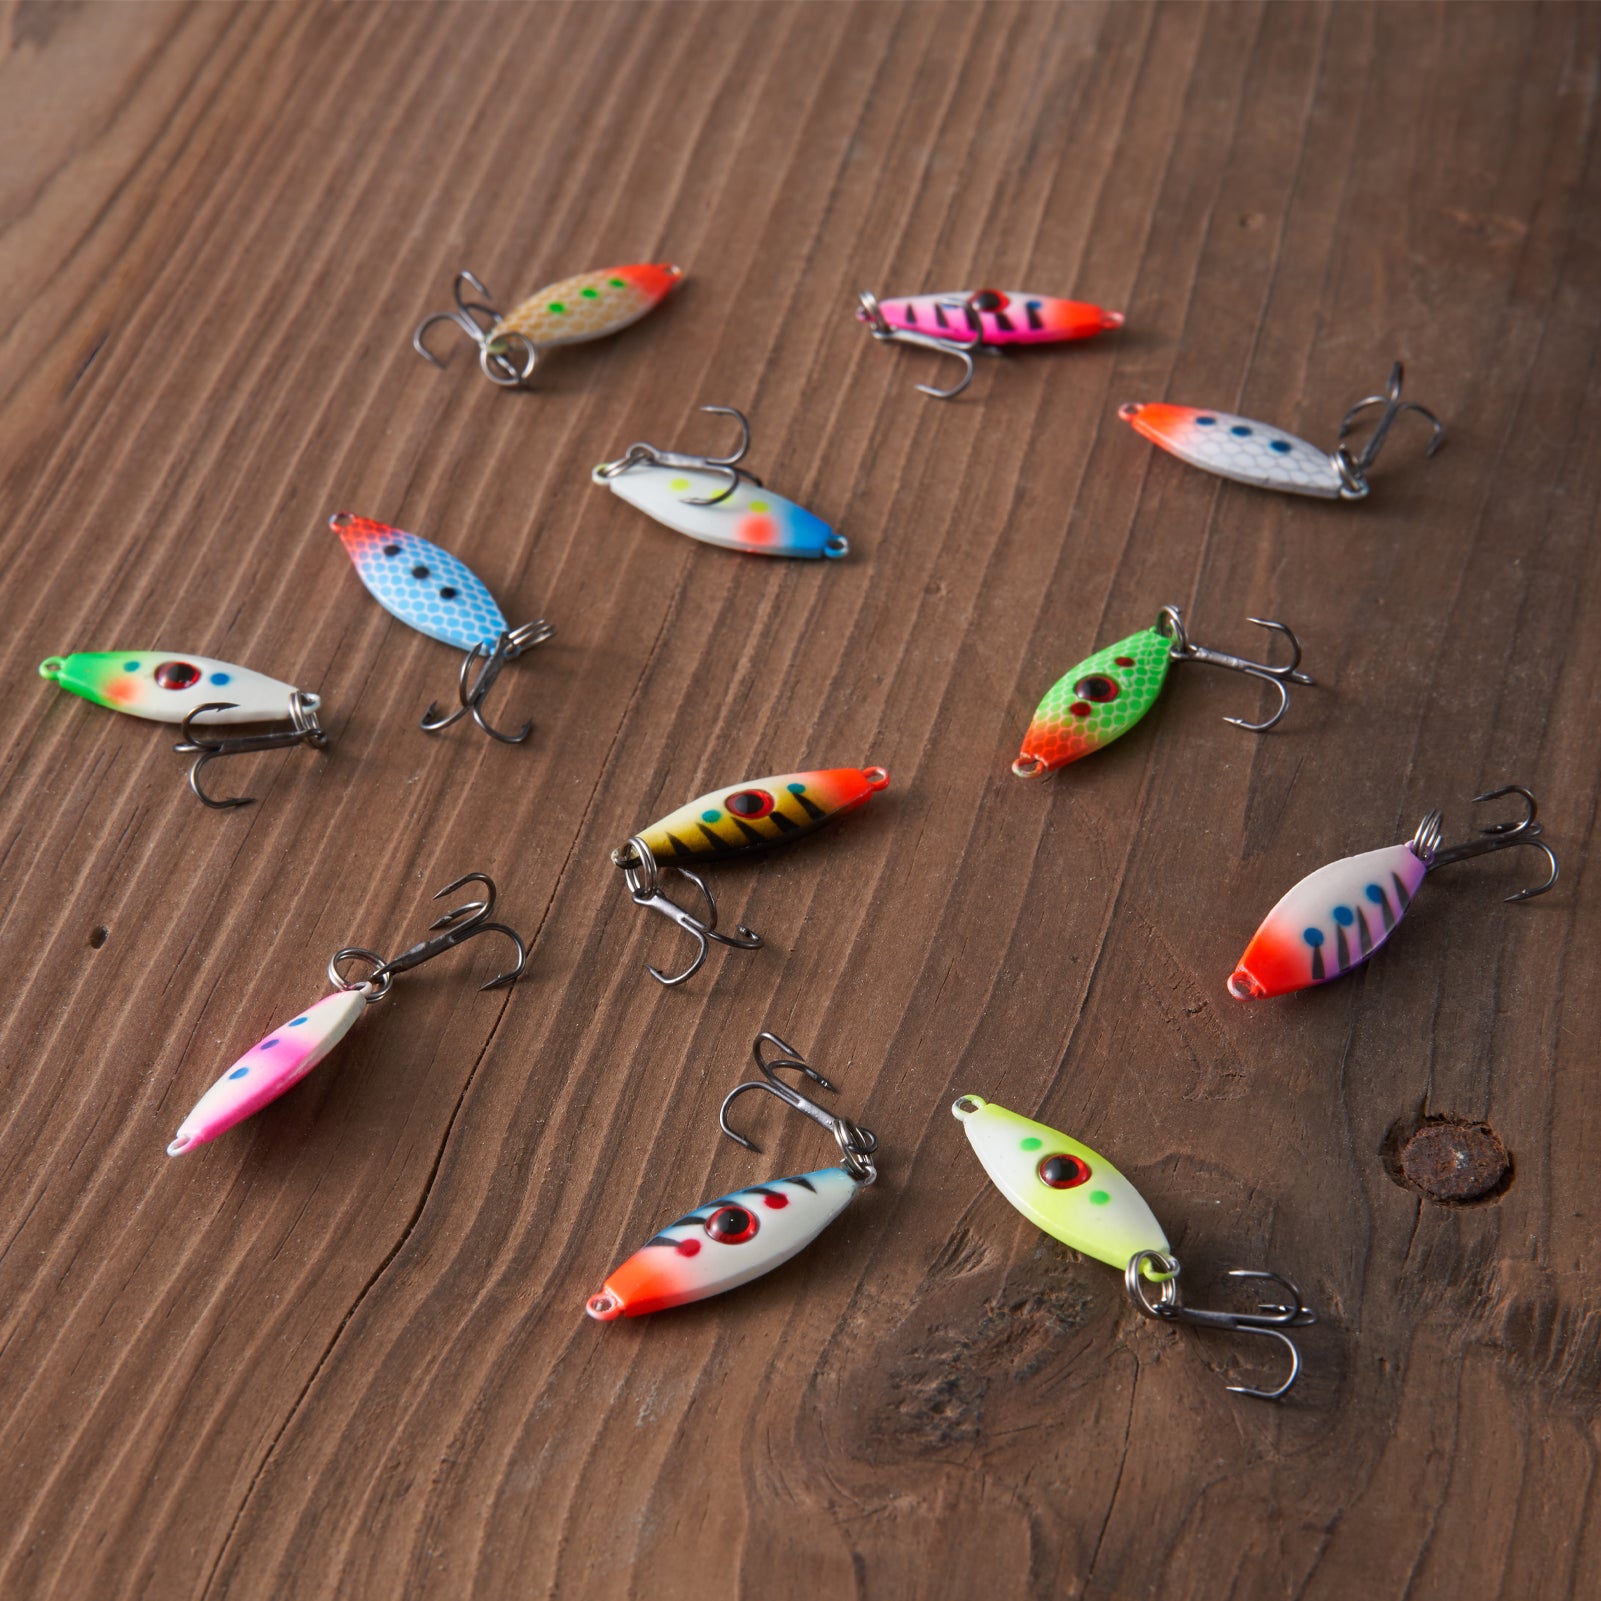 Ice Fishing Lure Kit Glowing Paint Jigs, 12pcs assorted perch/walleye/